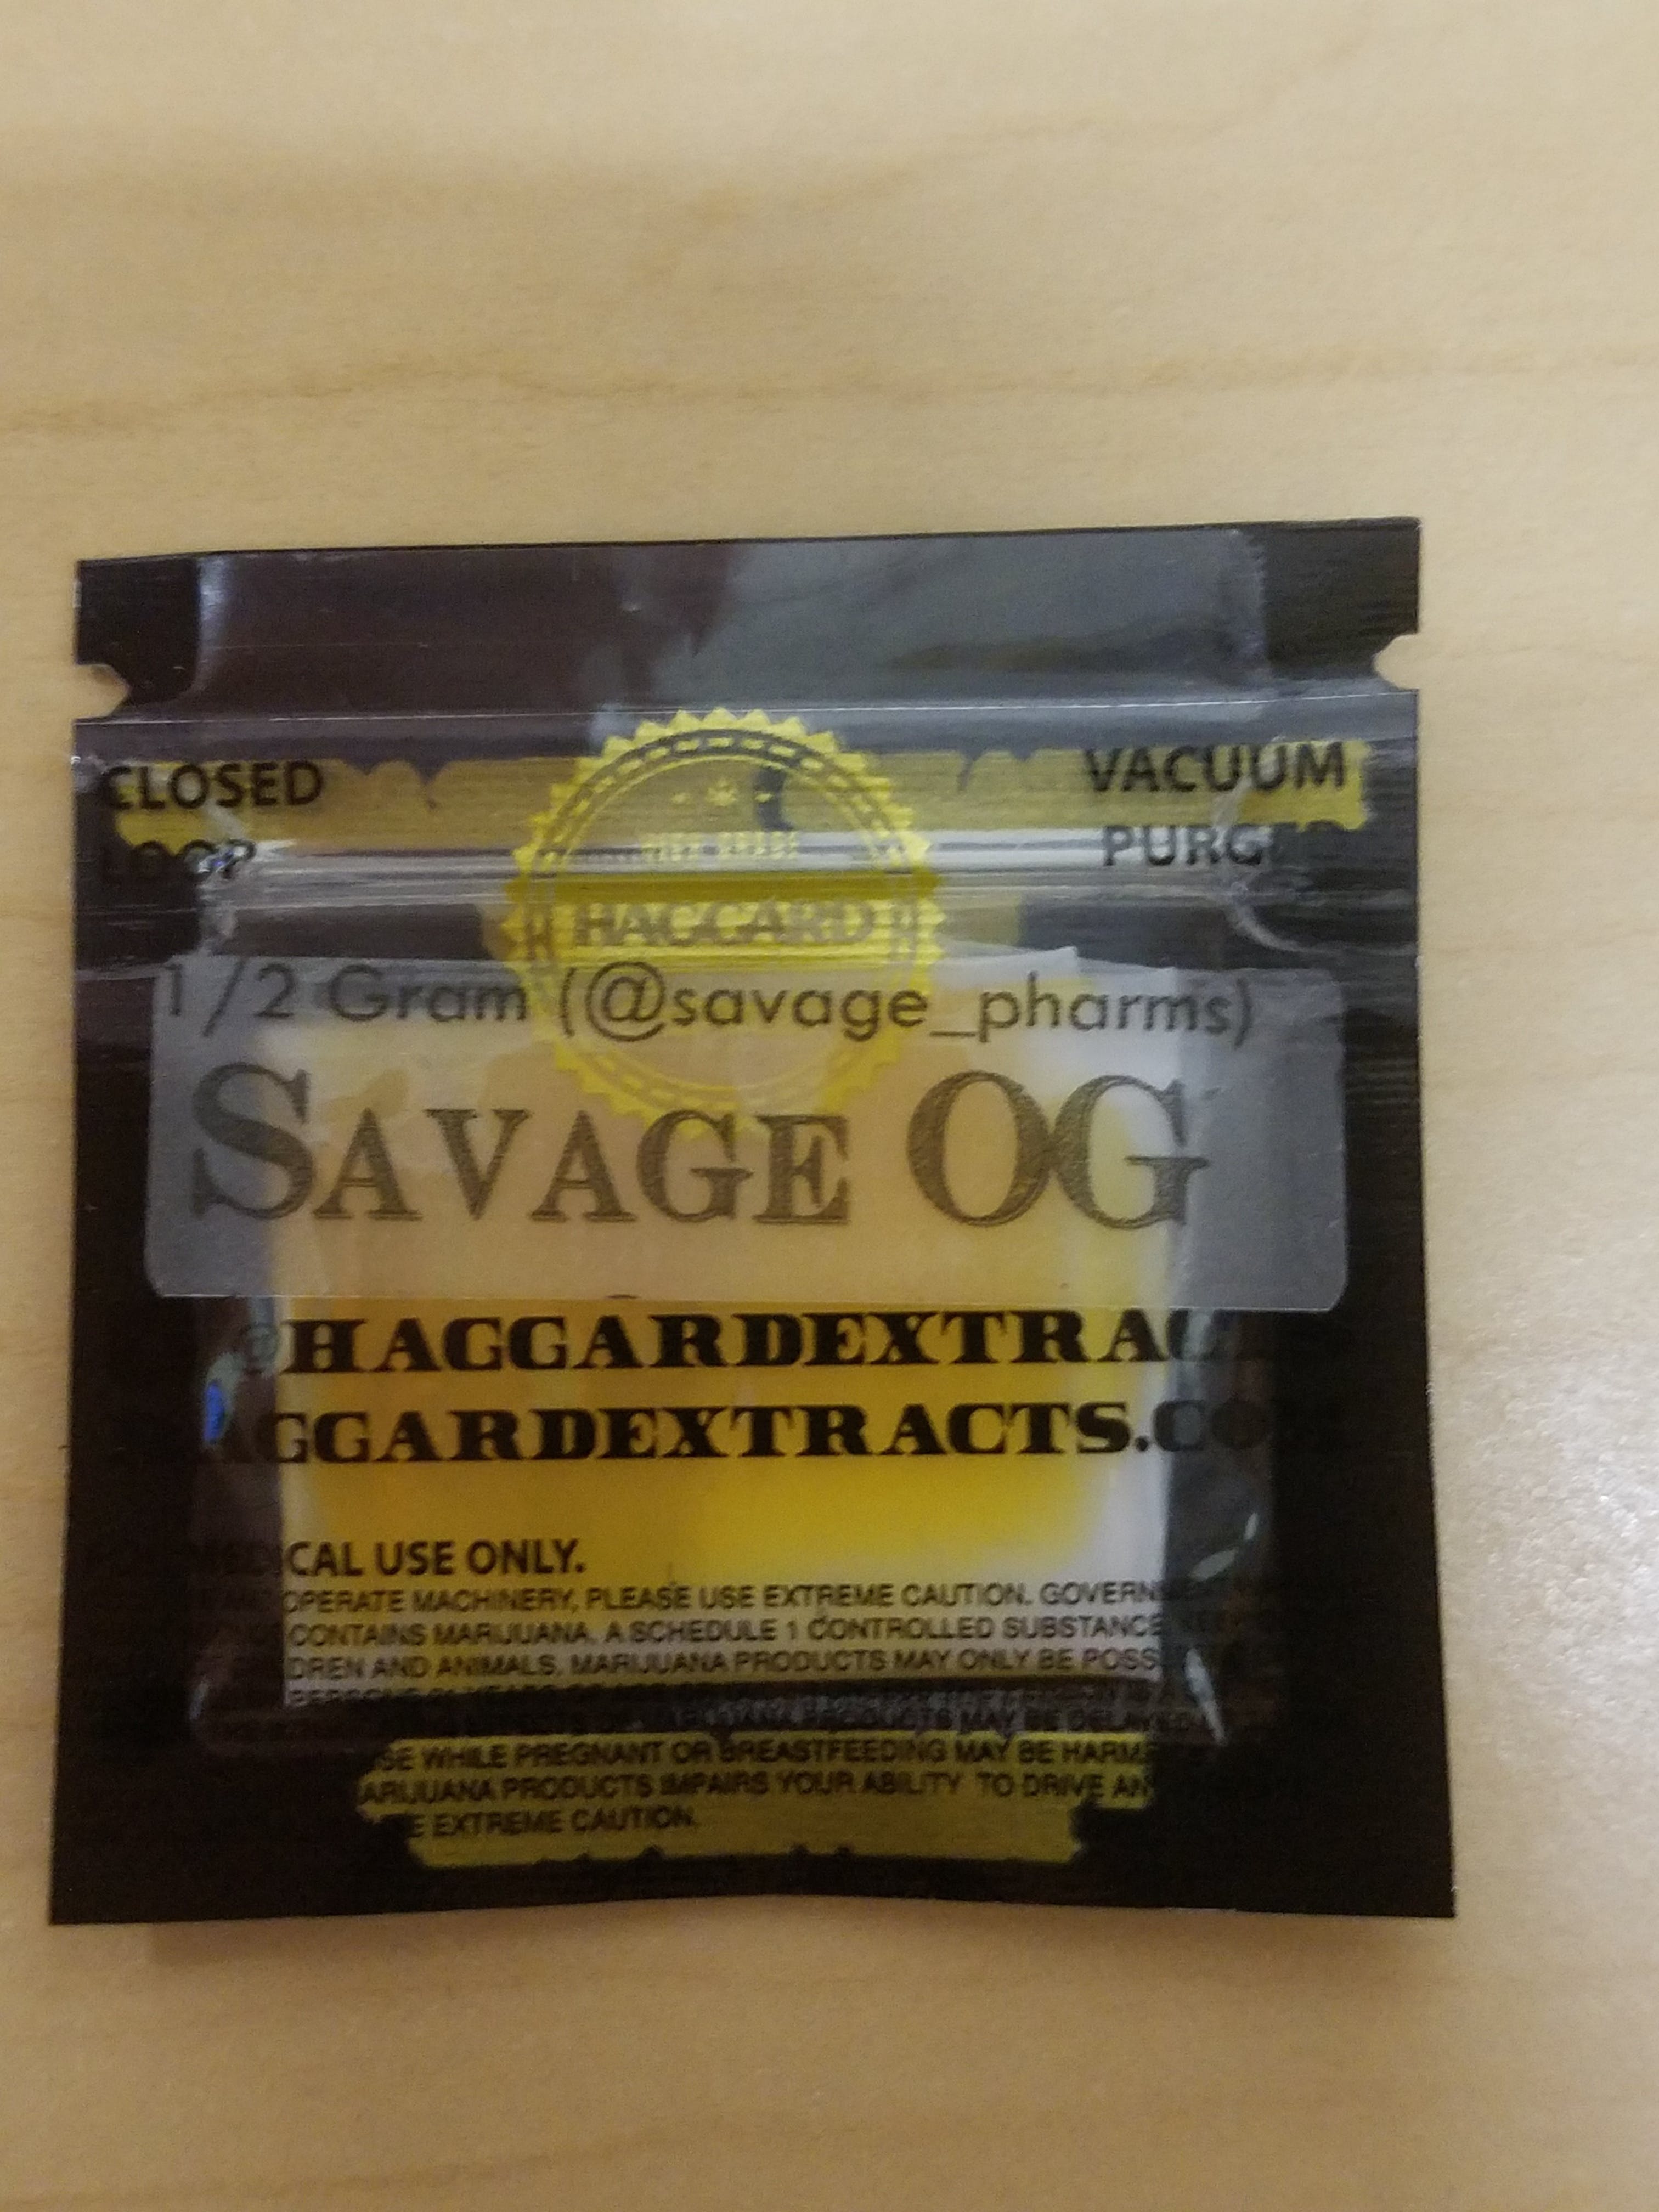 marijuana-dispensaries-42095-zevo-dr-unit-a-9-temecula-haggard-extracts-live-resin-savage-og